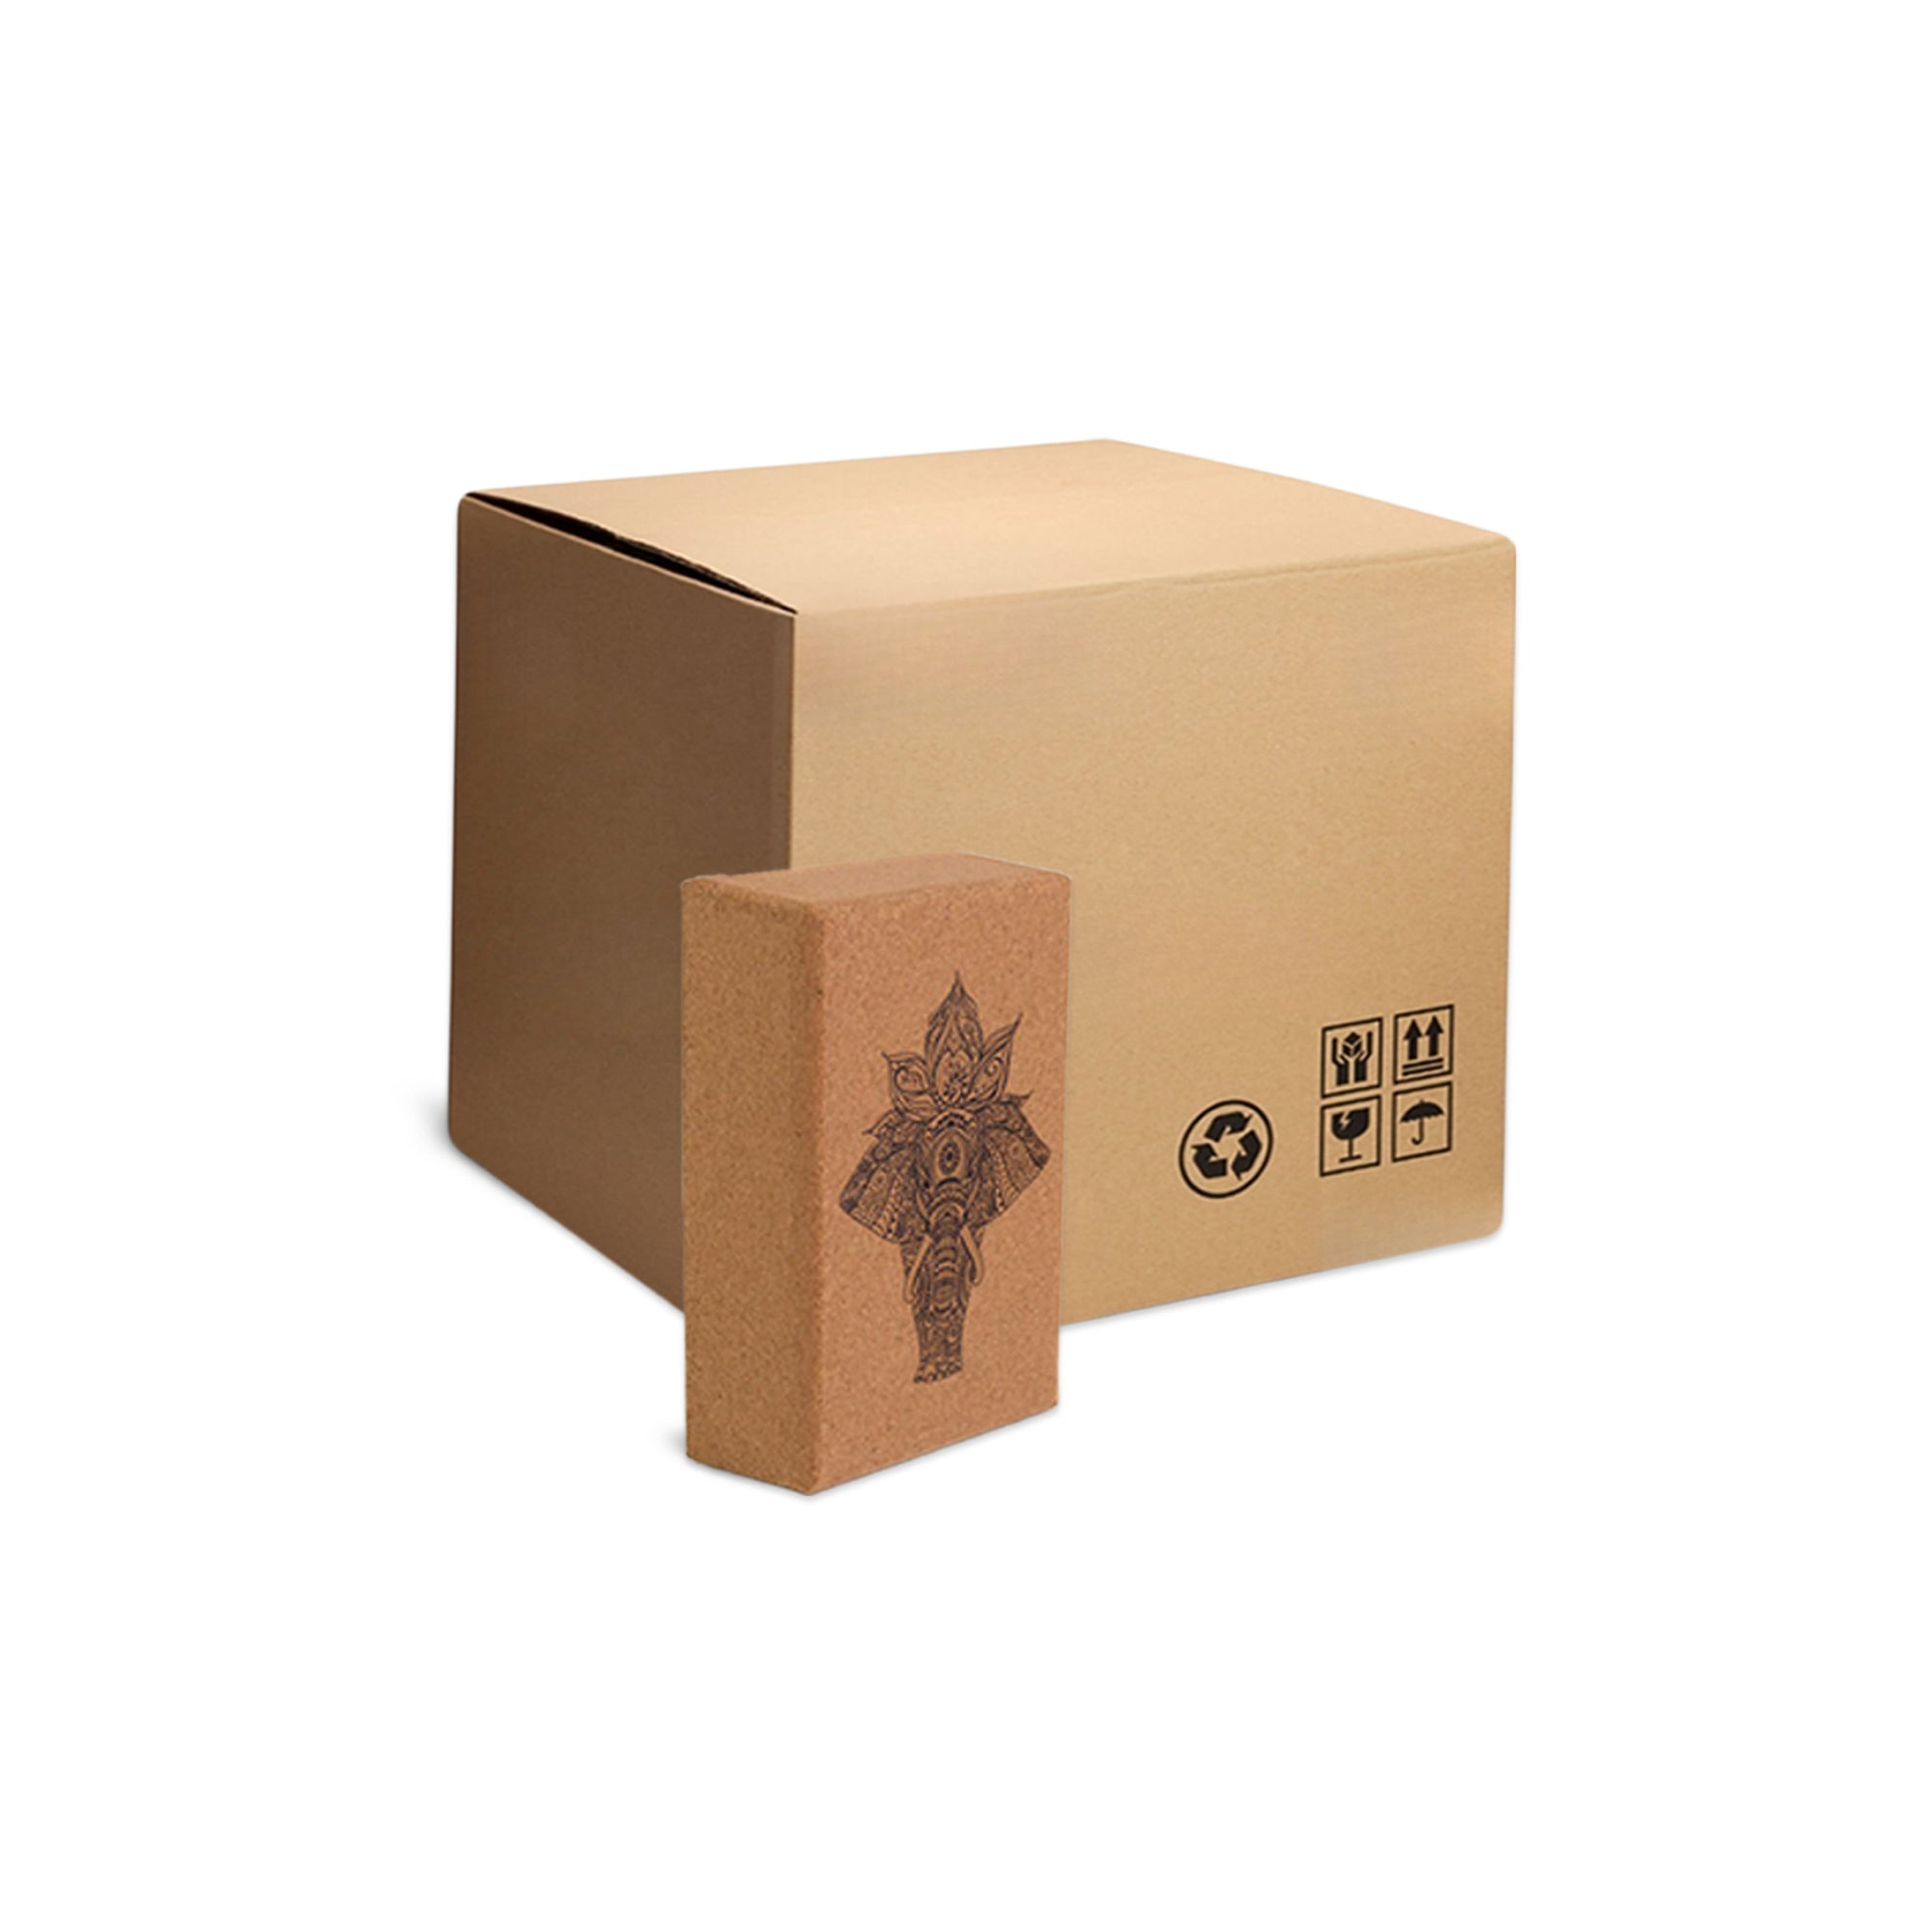 Yoga Blocks Wholesale - Box of 20